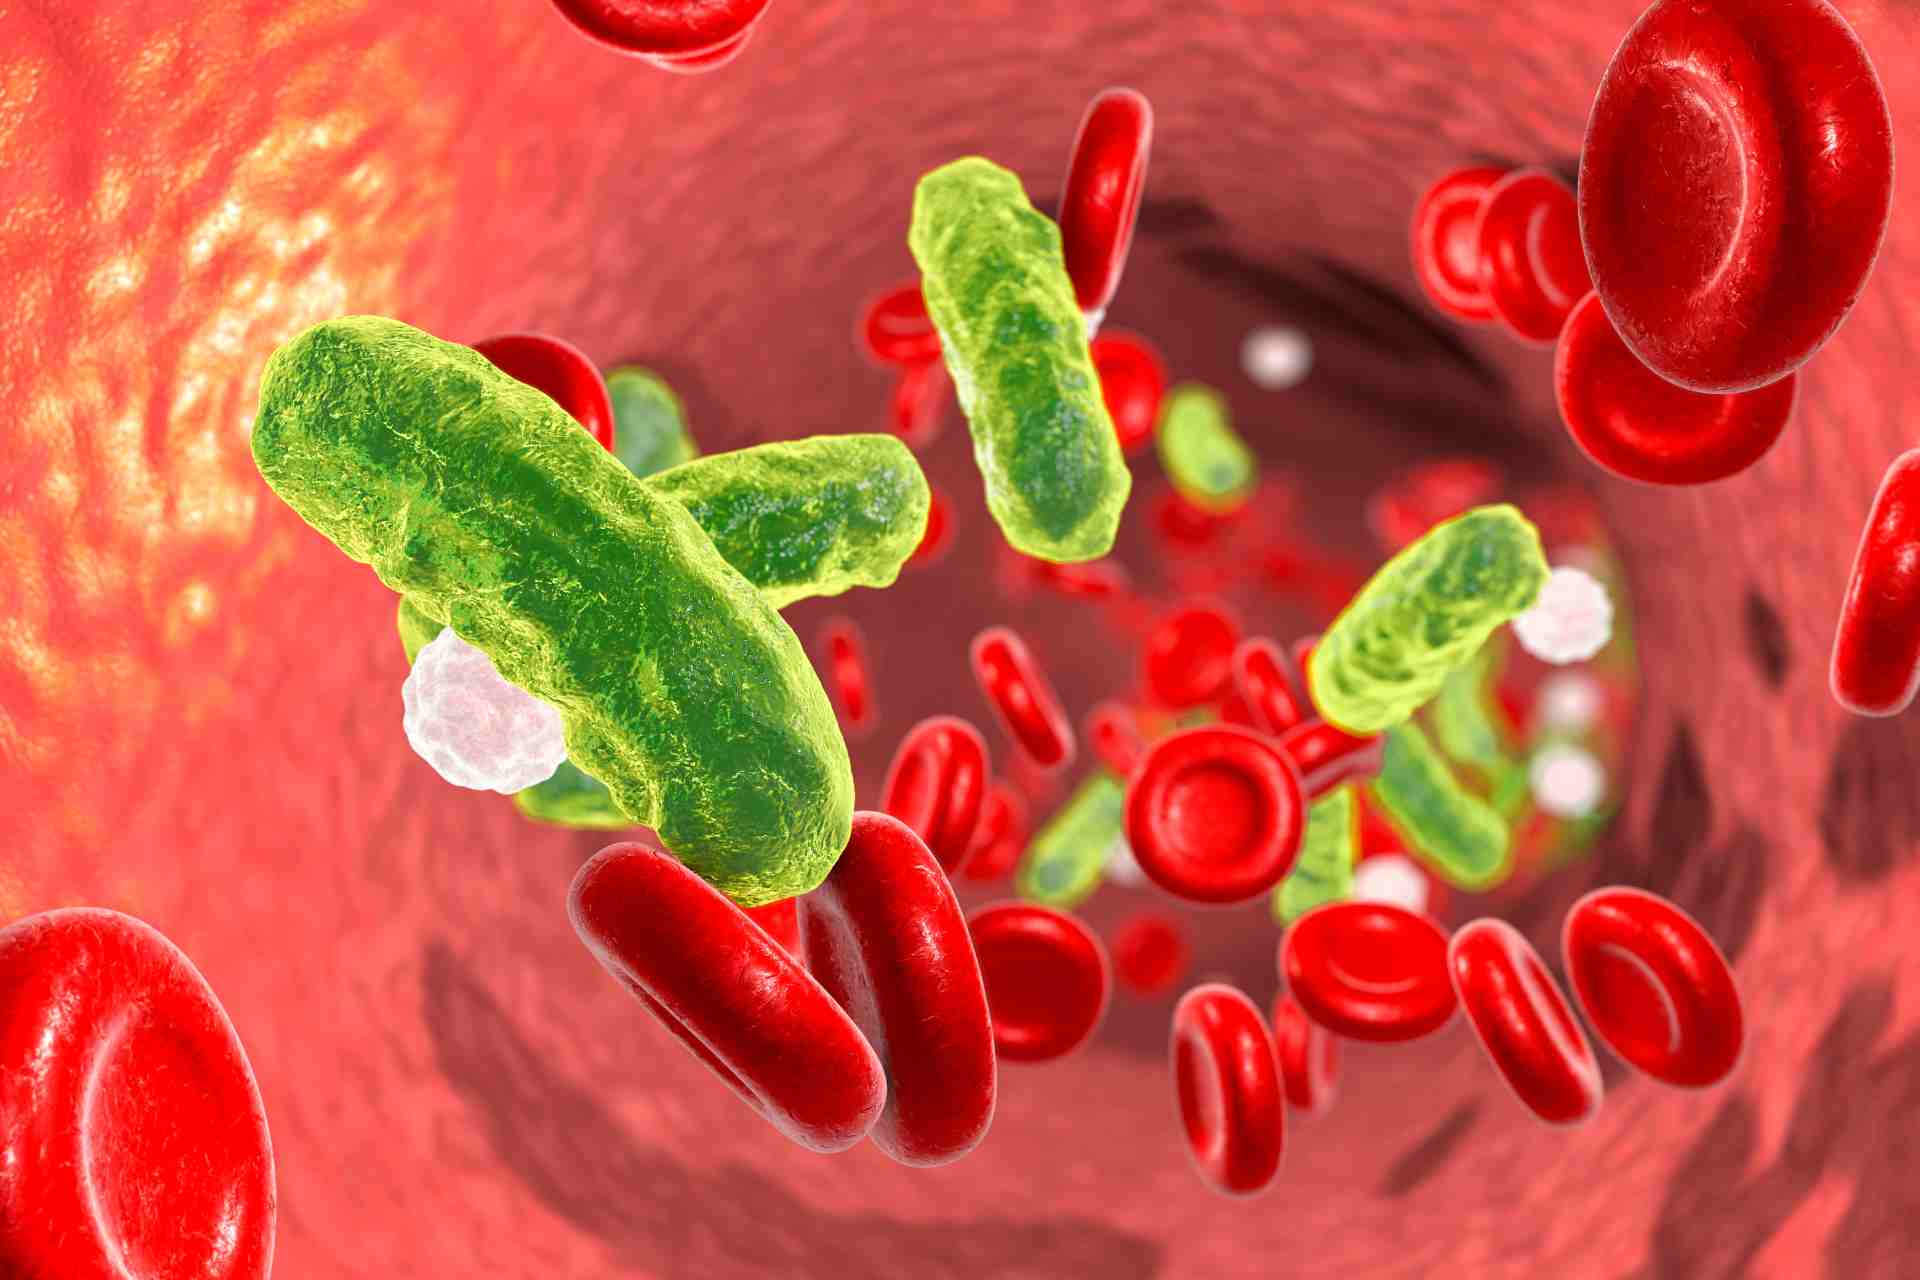 05_01_2024_Batteriemia microbi nel sangue potrebbero arrivare dal microbiota intestinale